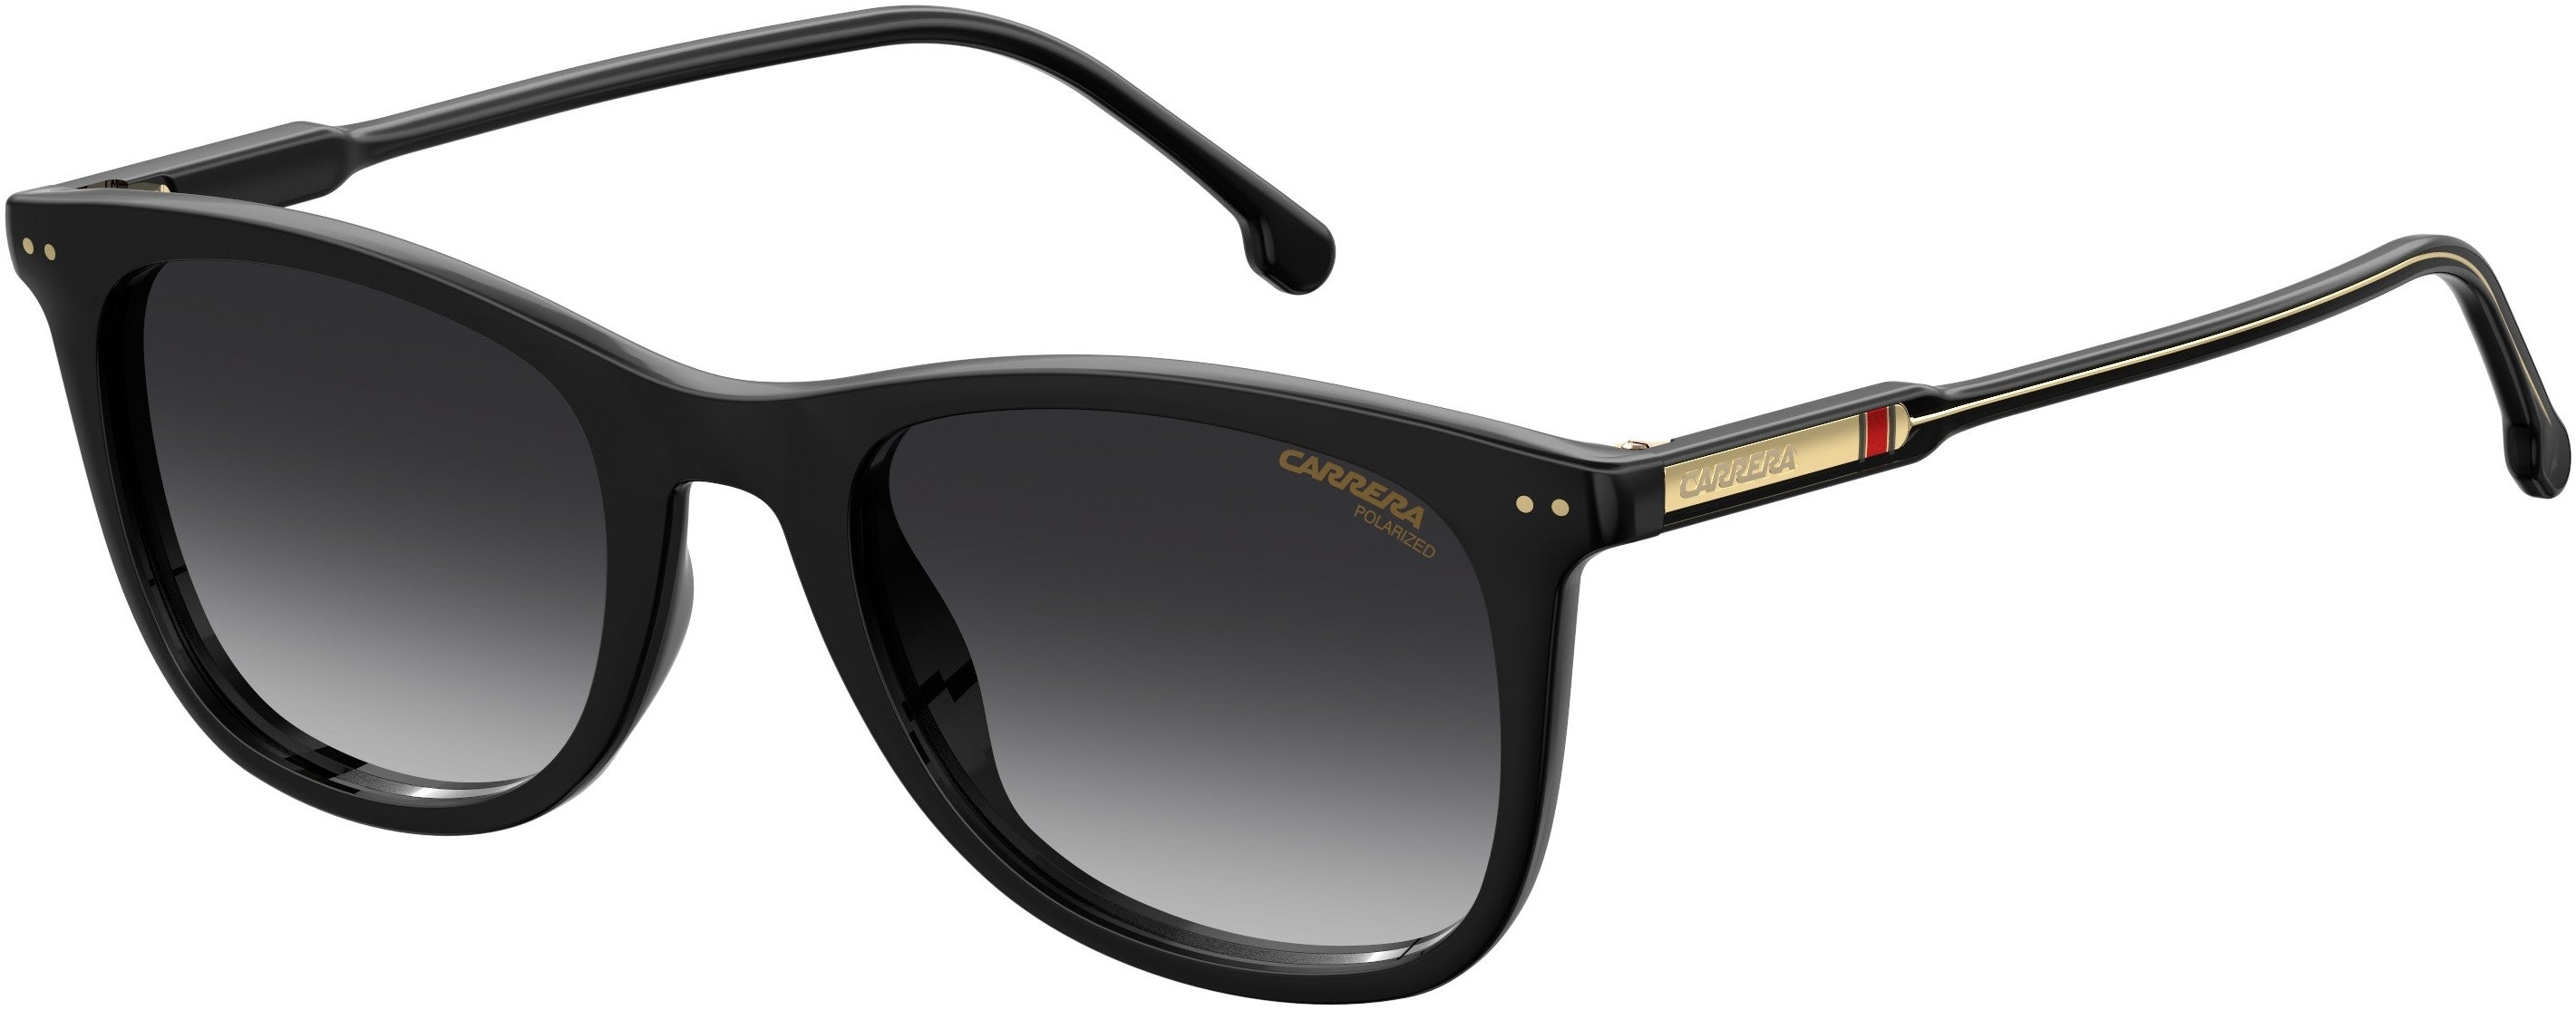  Carrera 197/S Rectangular Sunglasses 008A-008A  Black Gray (WJ Gray Sf Pz)